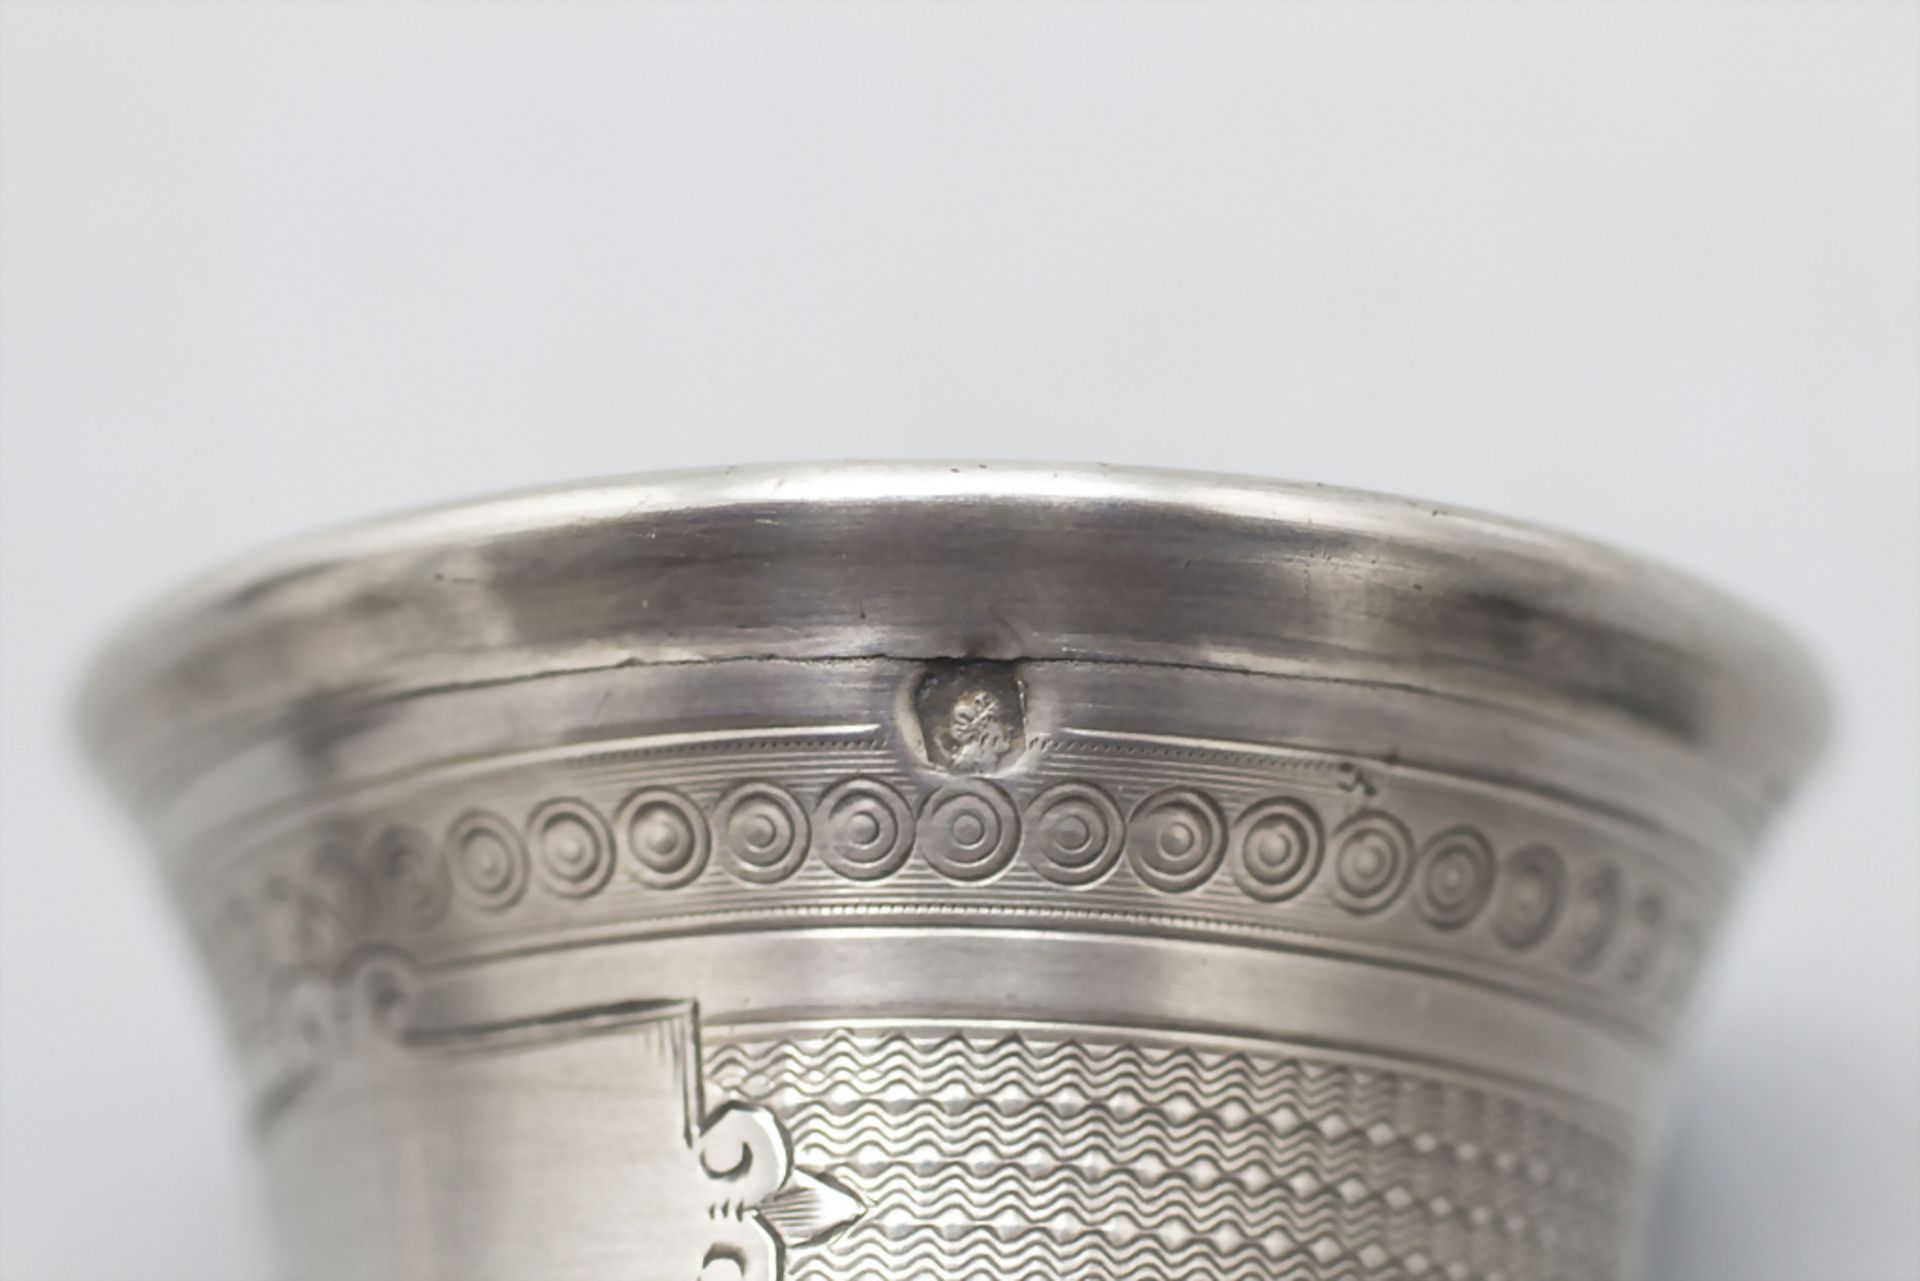 Schnapsbecher / A silver liquor cup, Frankreich, 2. Hälfte 19. Jh. - Image 4 of 5